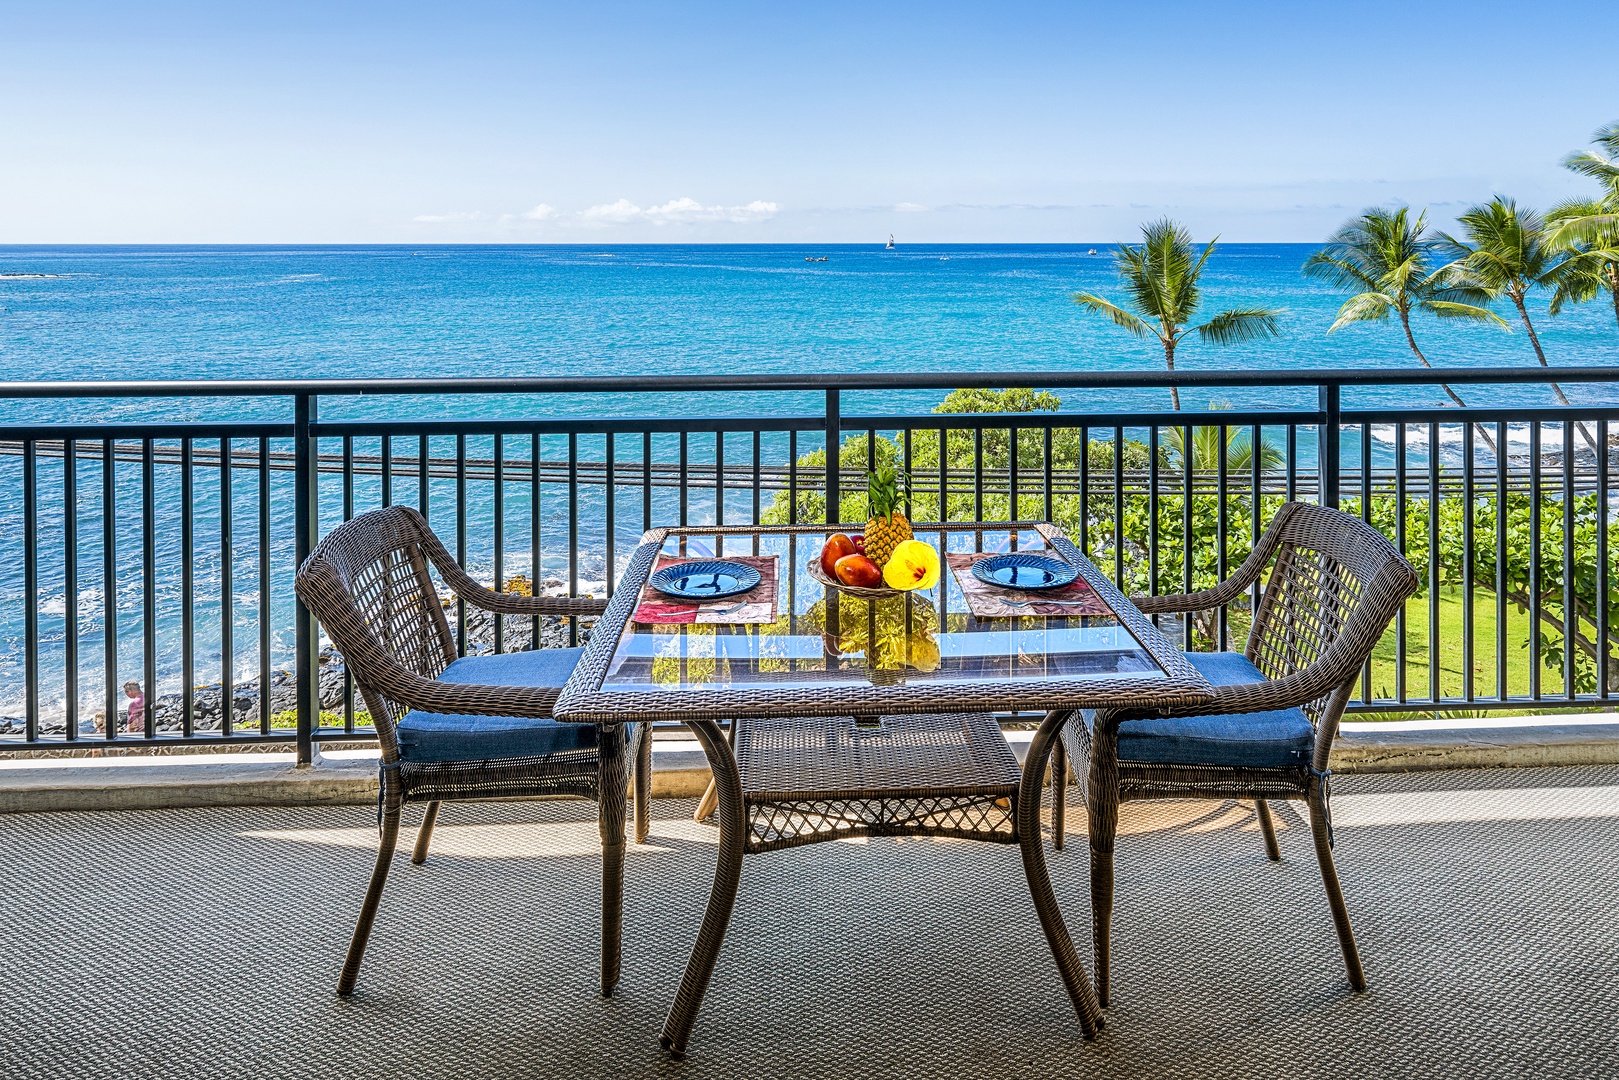 Kailua Kona Vacation Rentals, Kona Alii 304 - Outdoor dining on the Lanai overlooking the beautiful Kona coast